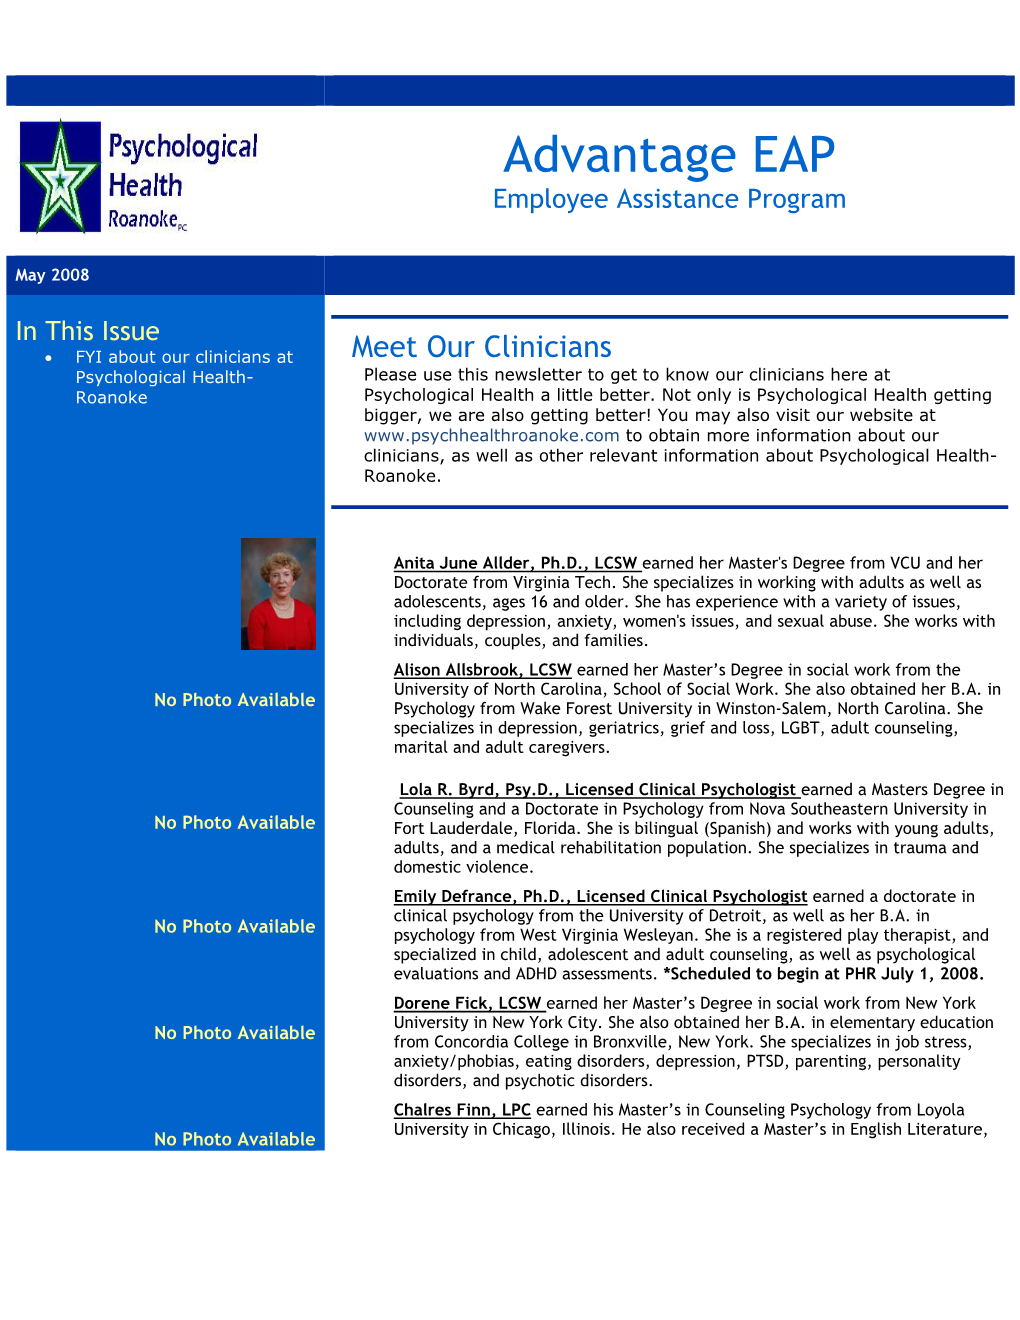 Advantage EAP Employee Assistance Program